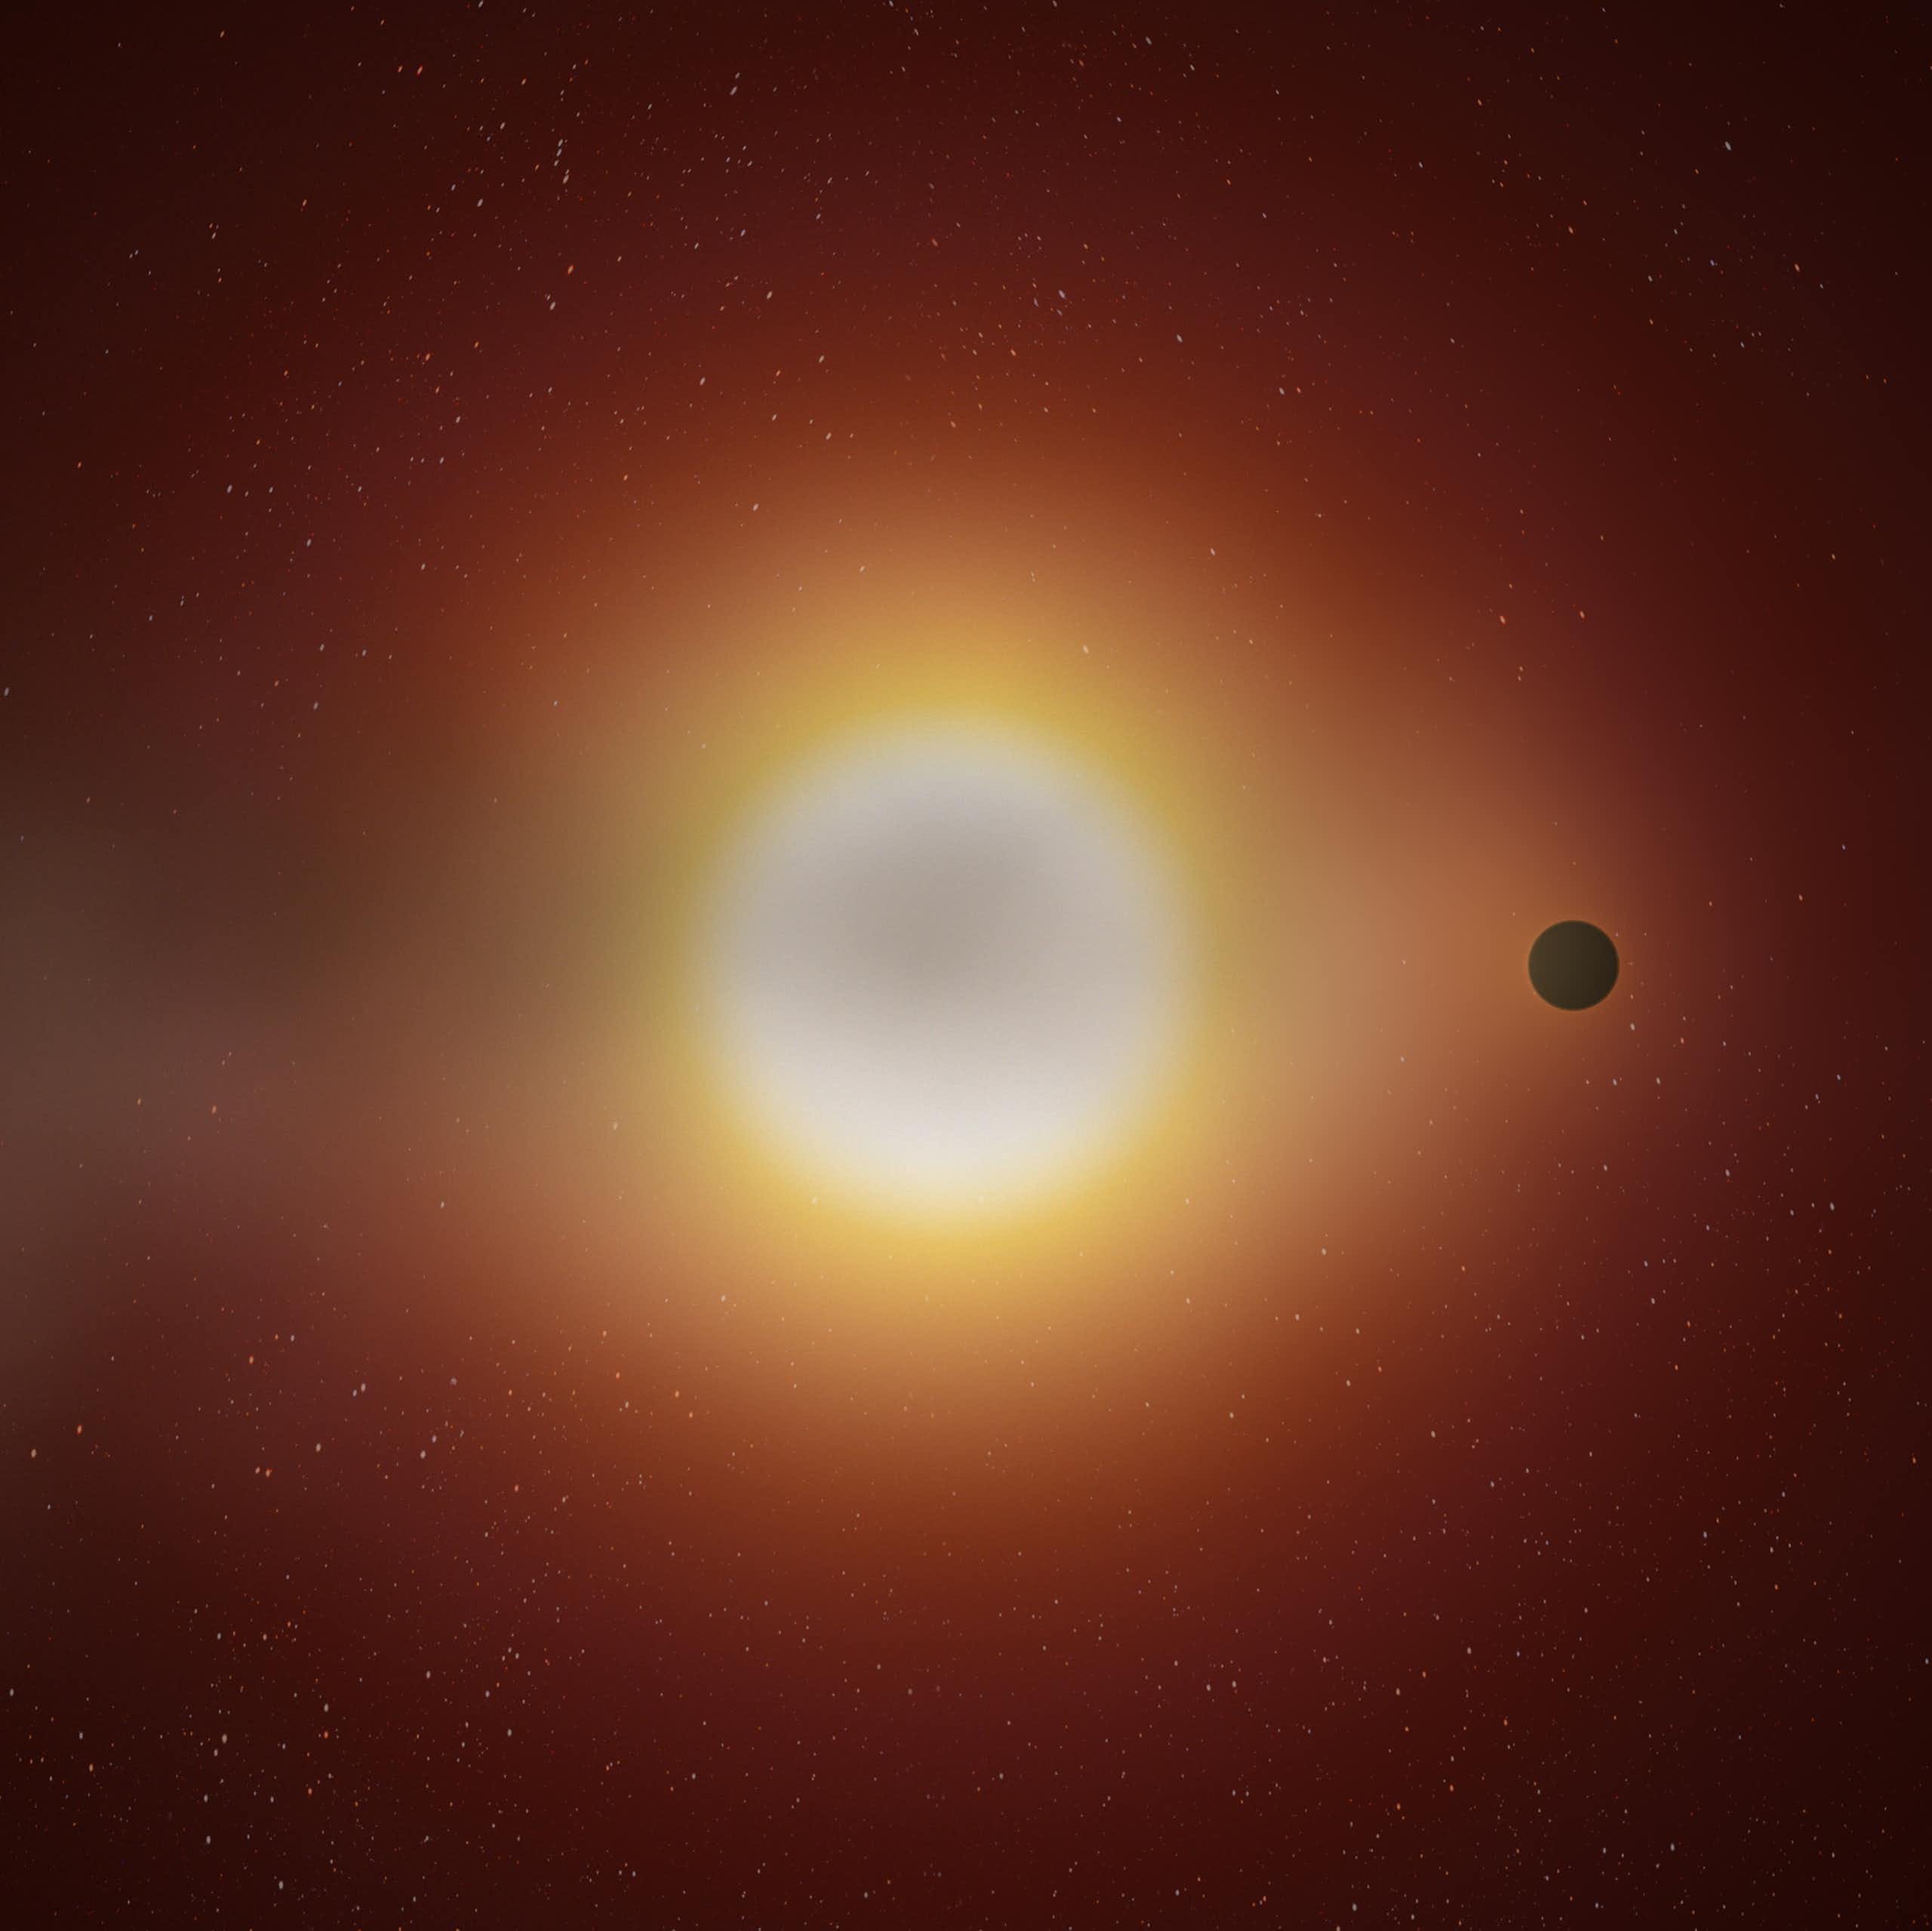 A small planet orbiting around a sun.